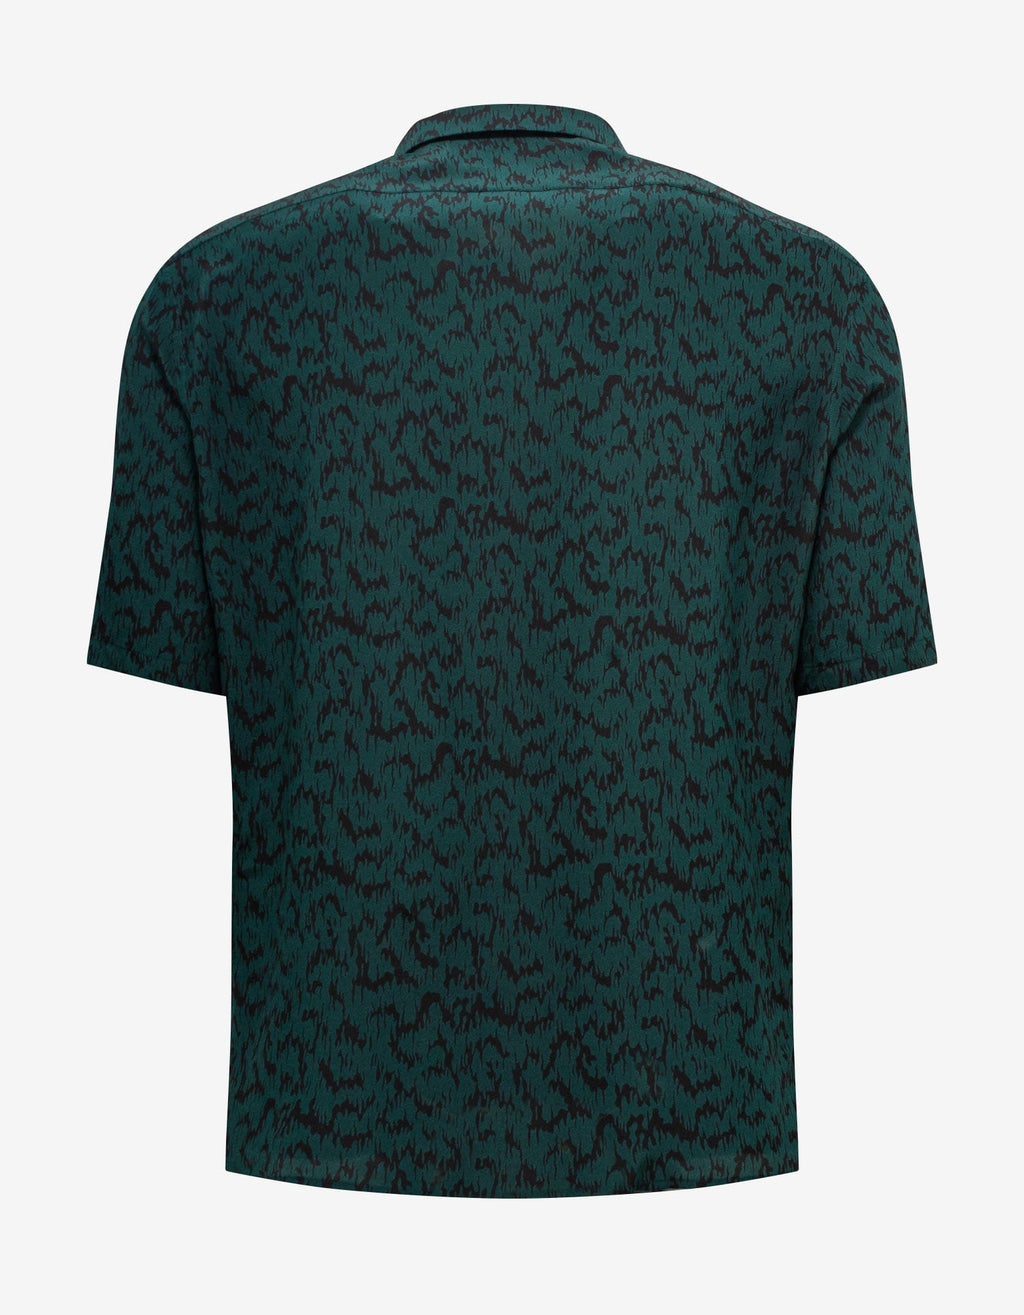 Saint Laurent Green Printed Silk Shirt